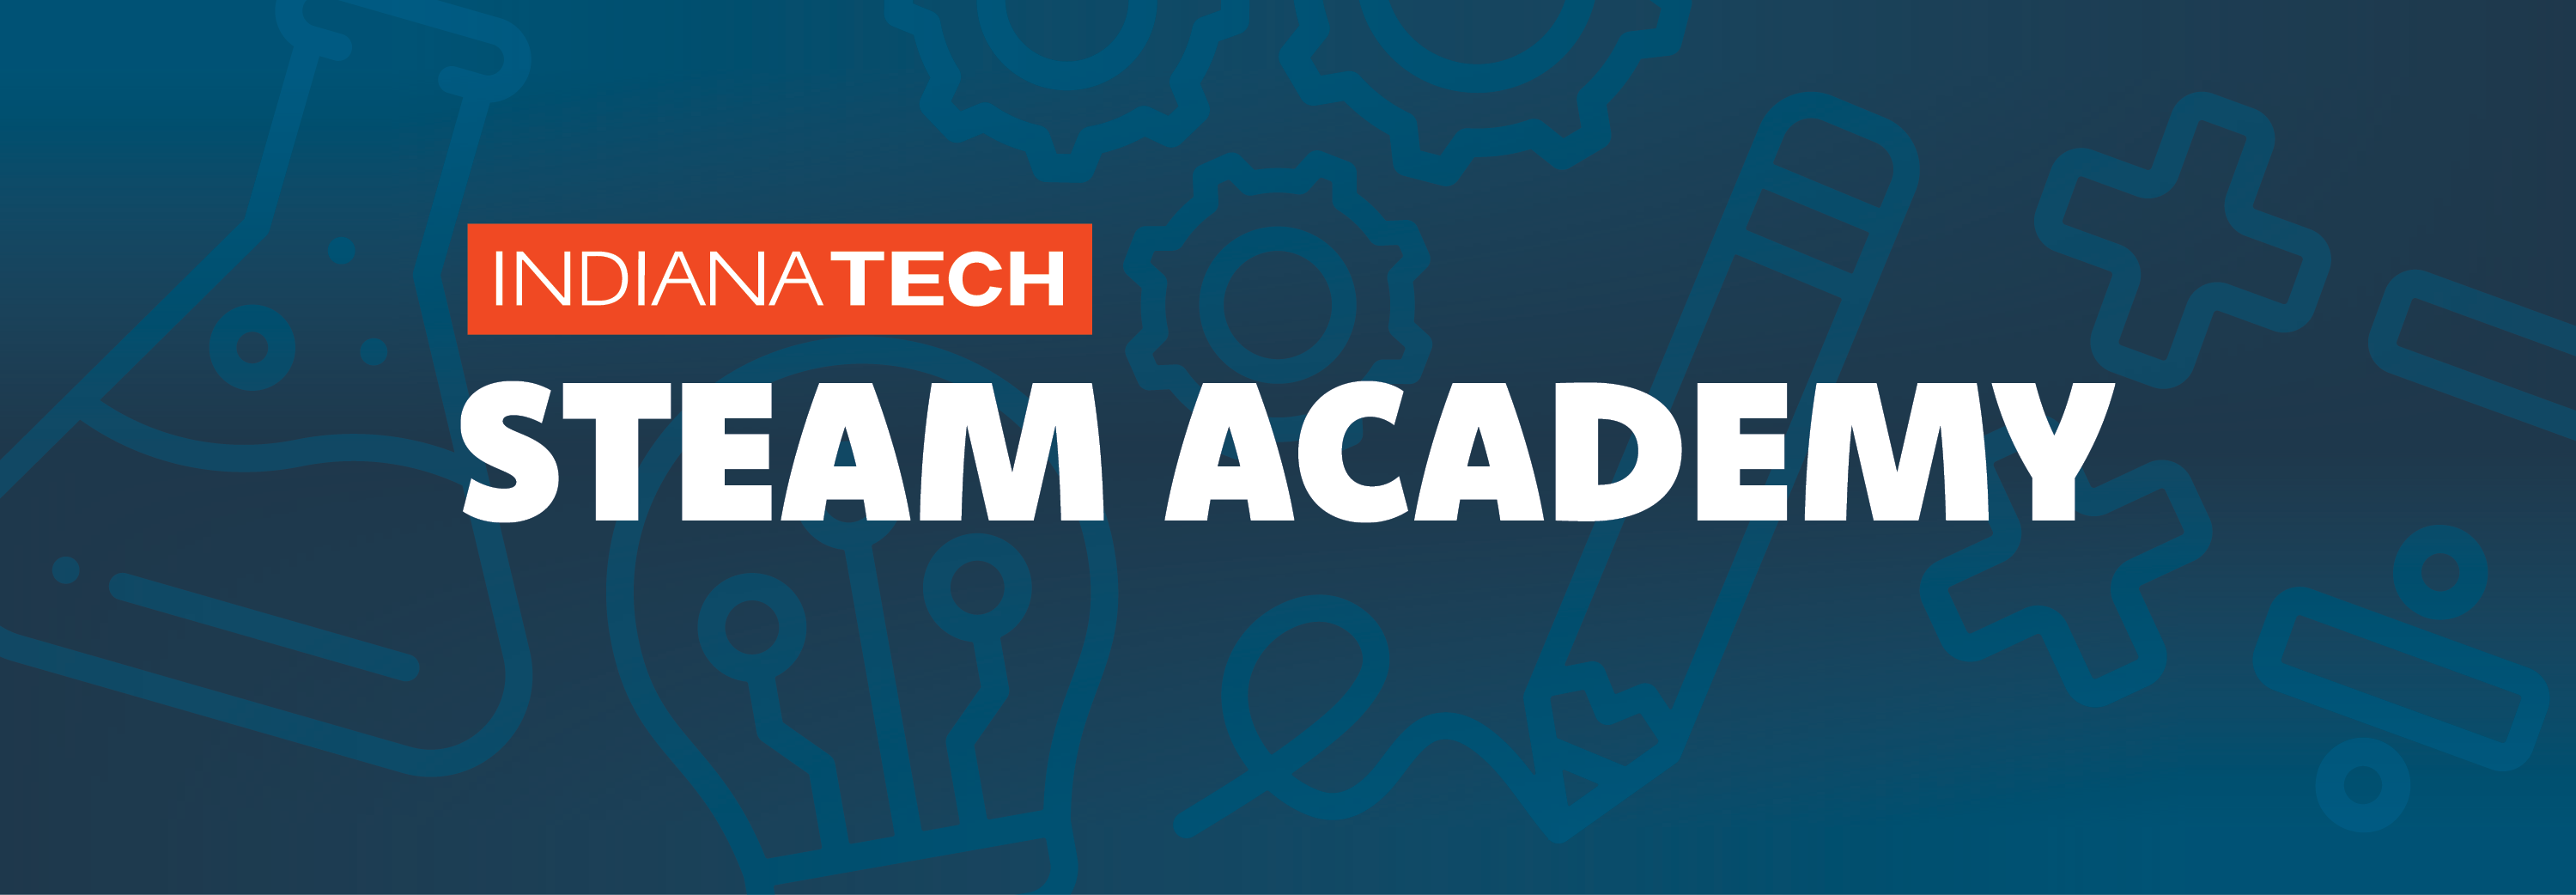 Indiana Tech STEAM Academy